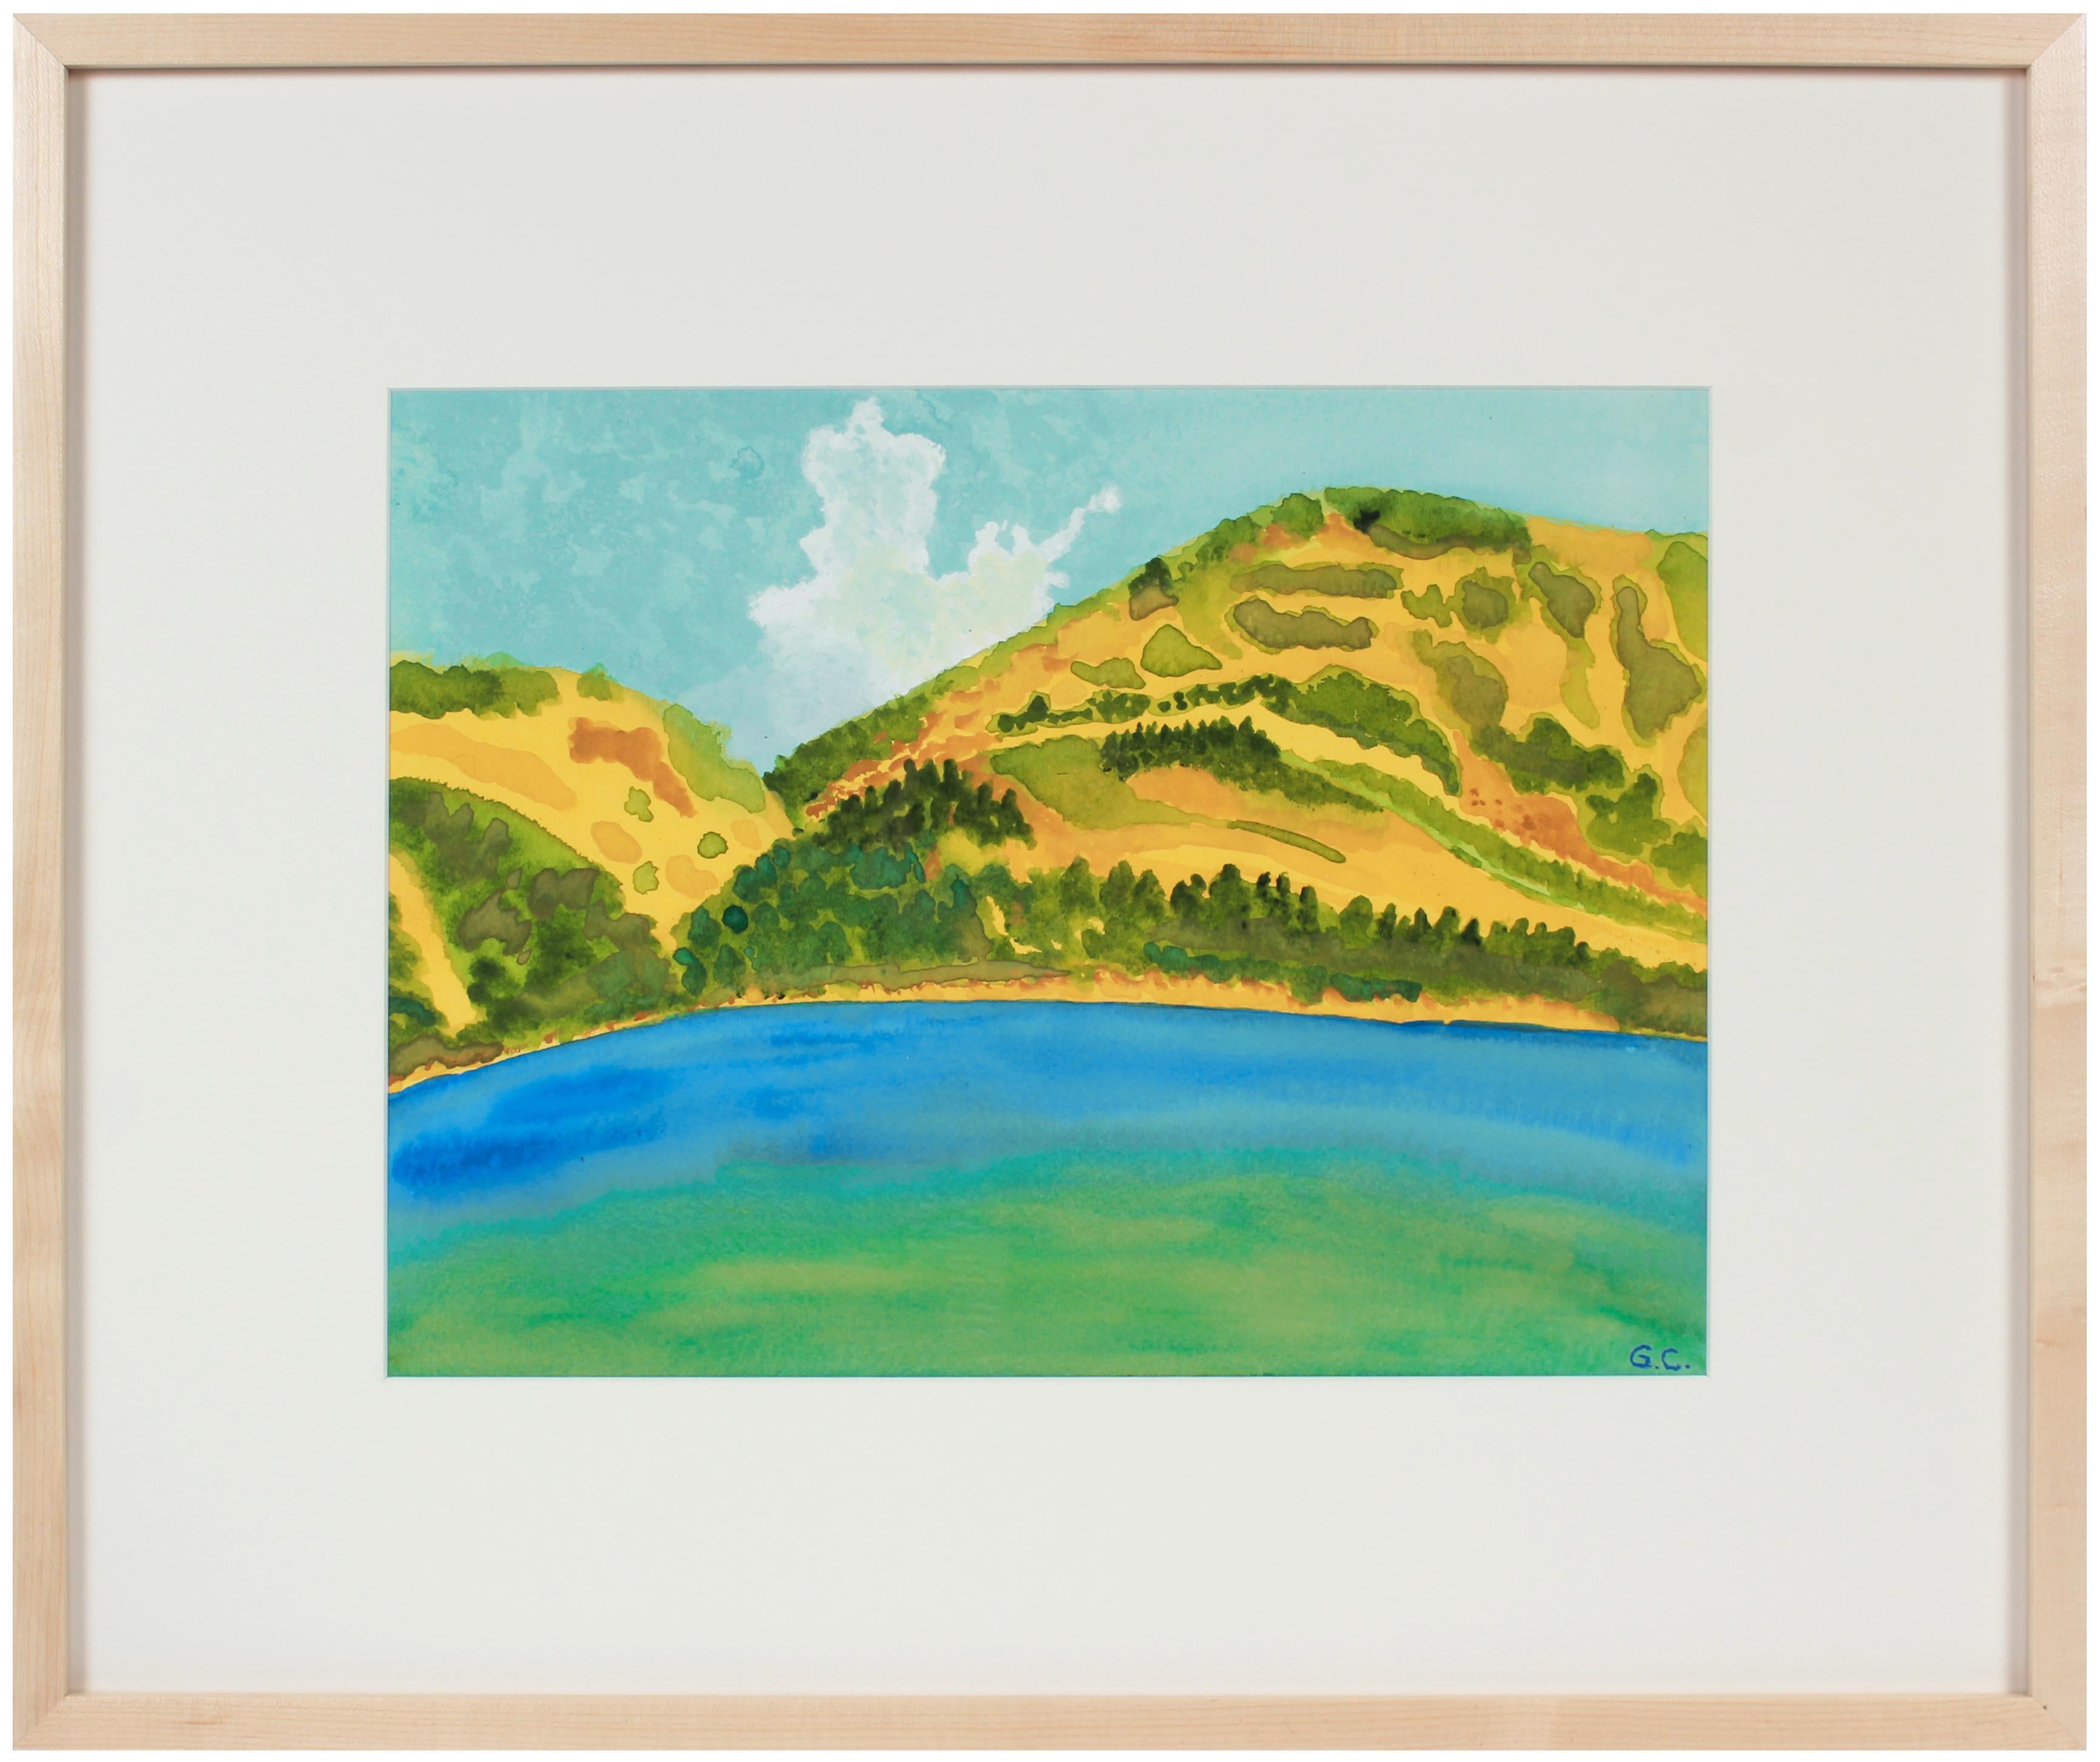 Gaétan Caron Landscape Art - "California Summer Lake" Mendocino Landscape in Watercolor, 2017